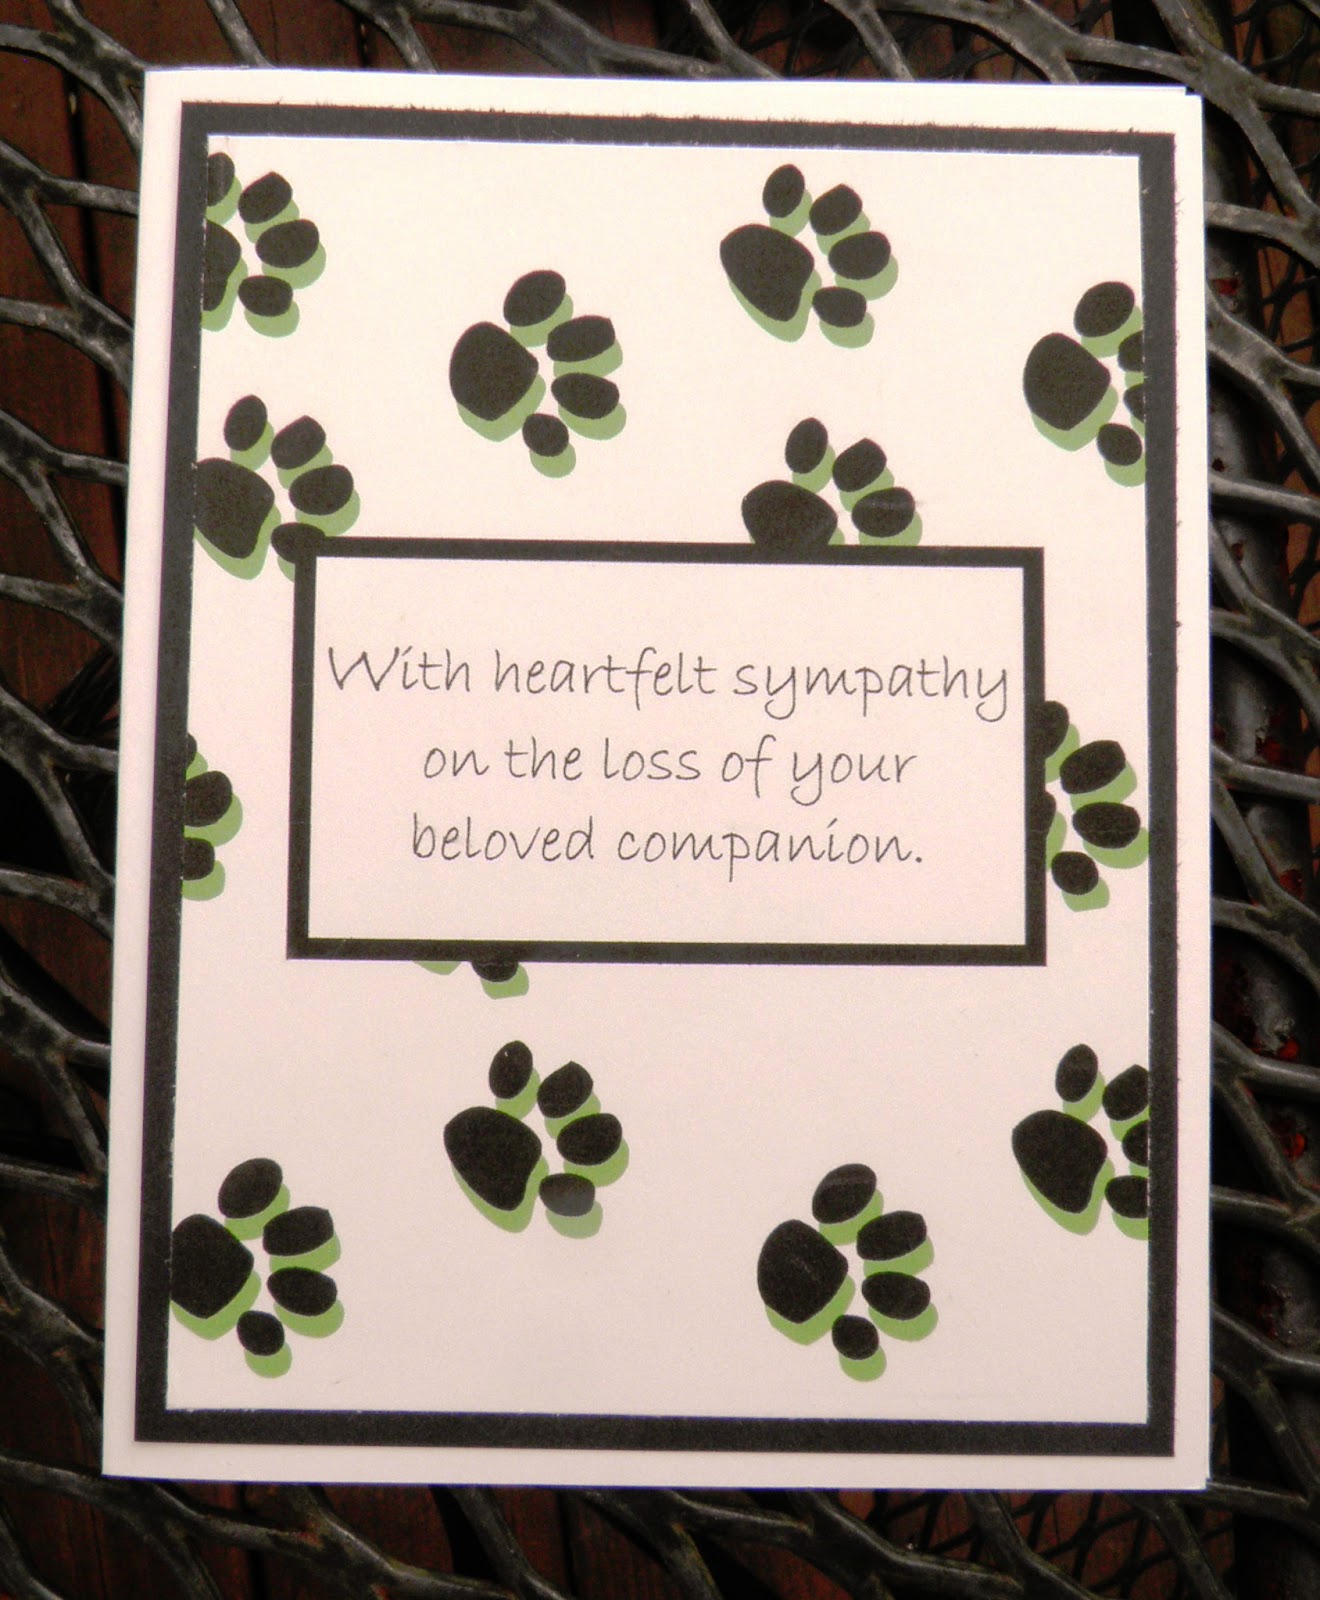 pet-sympathy-card-heart-remembers-loss-of-pet-dog-sympathy-etsy